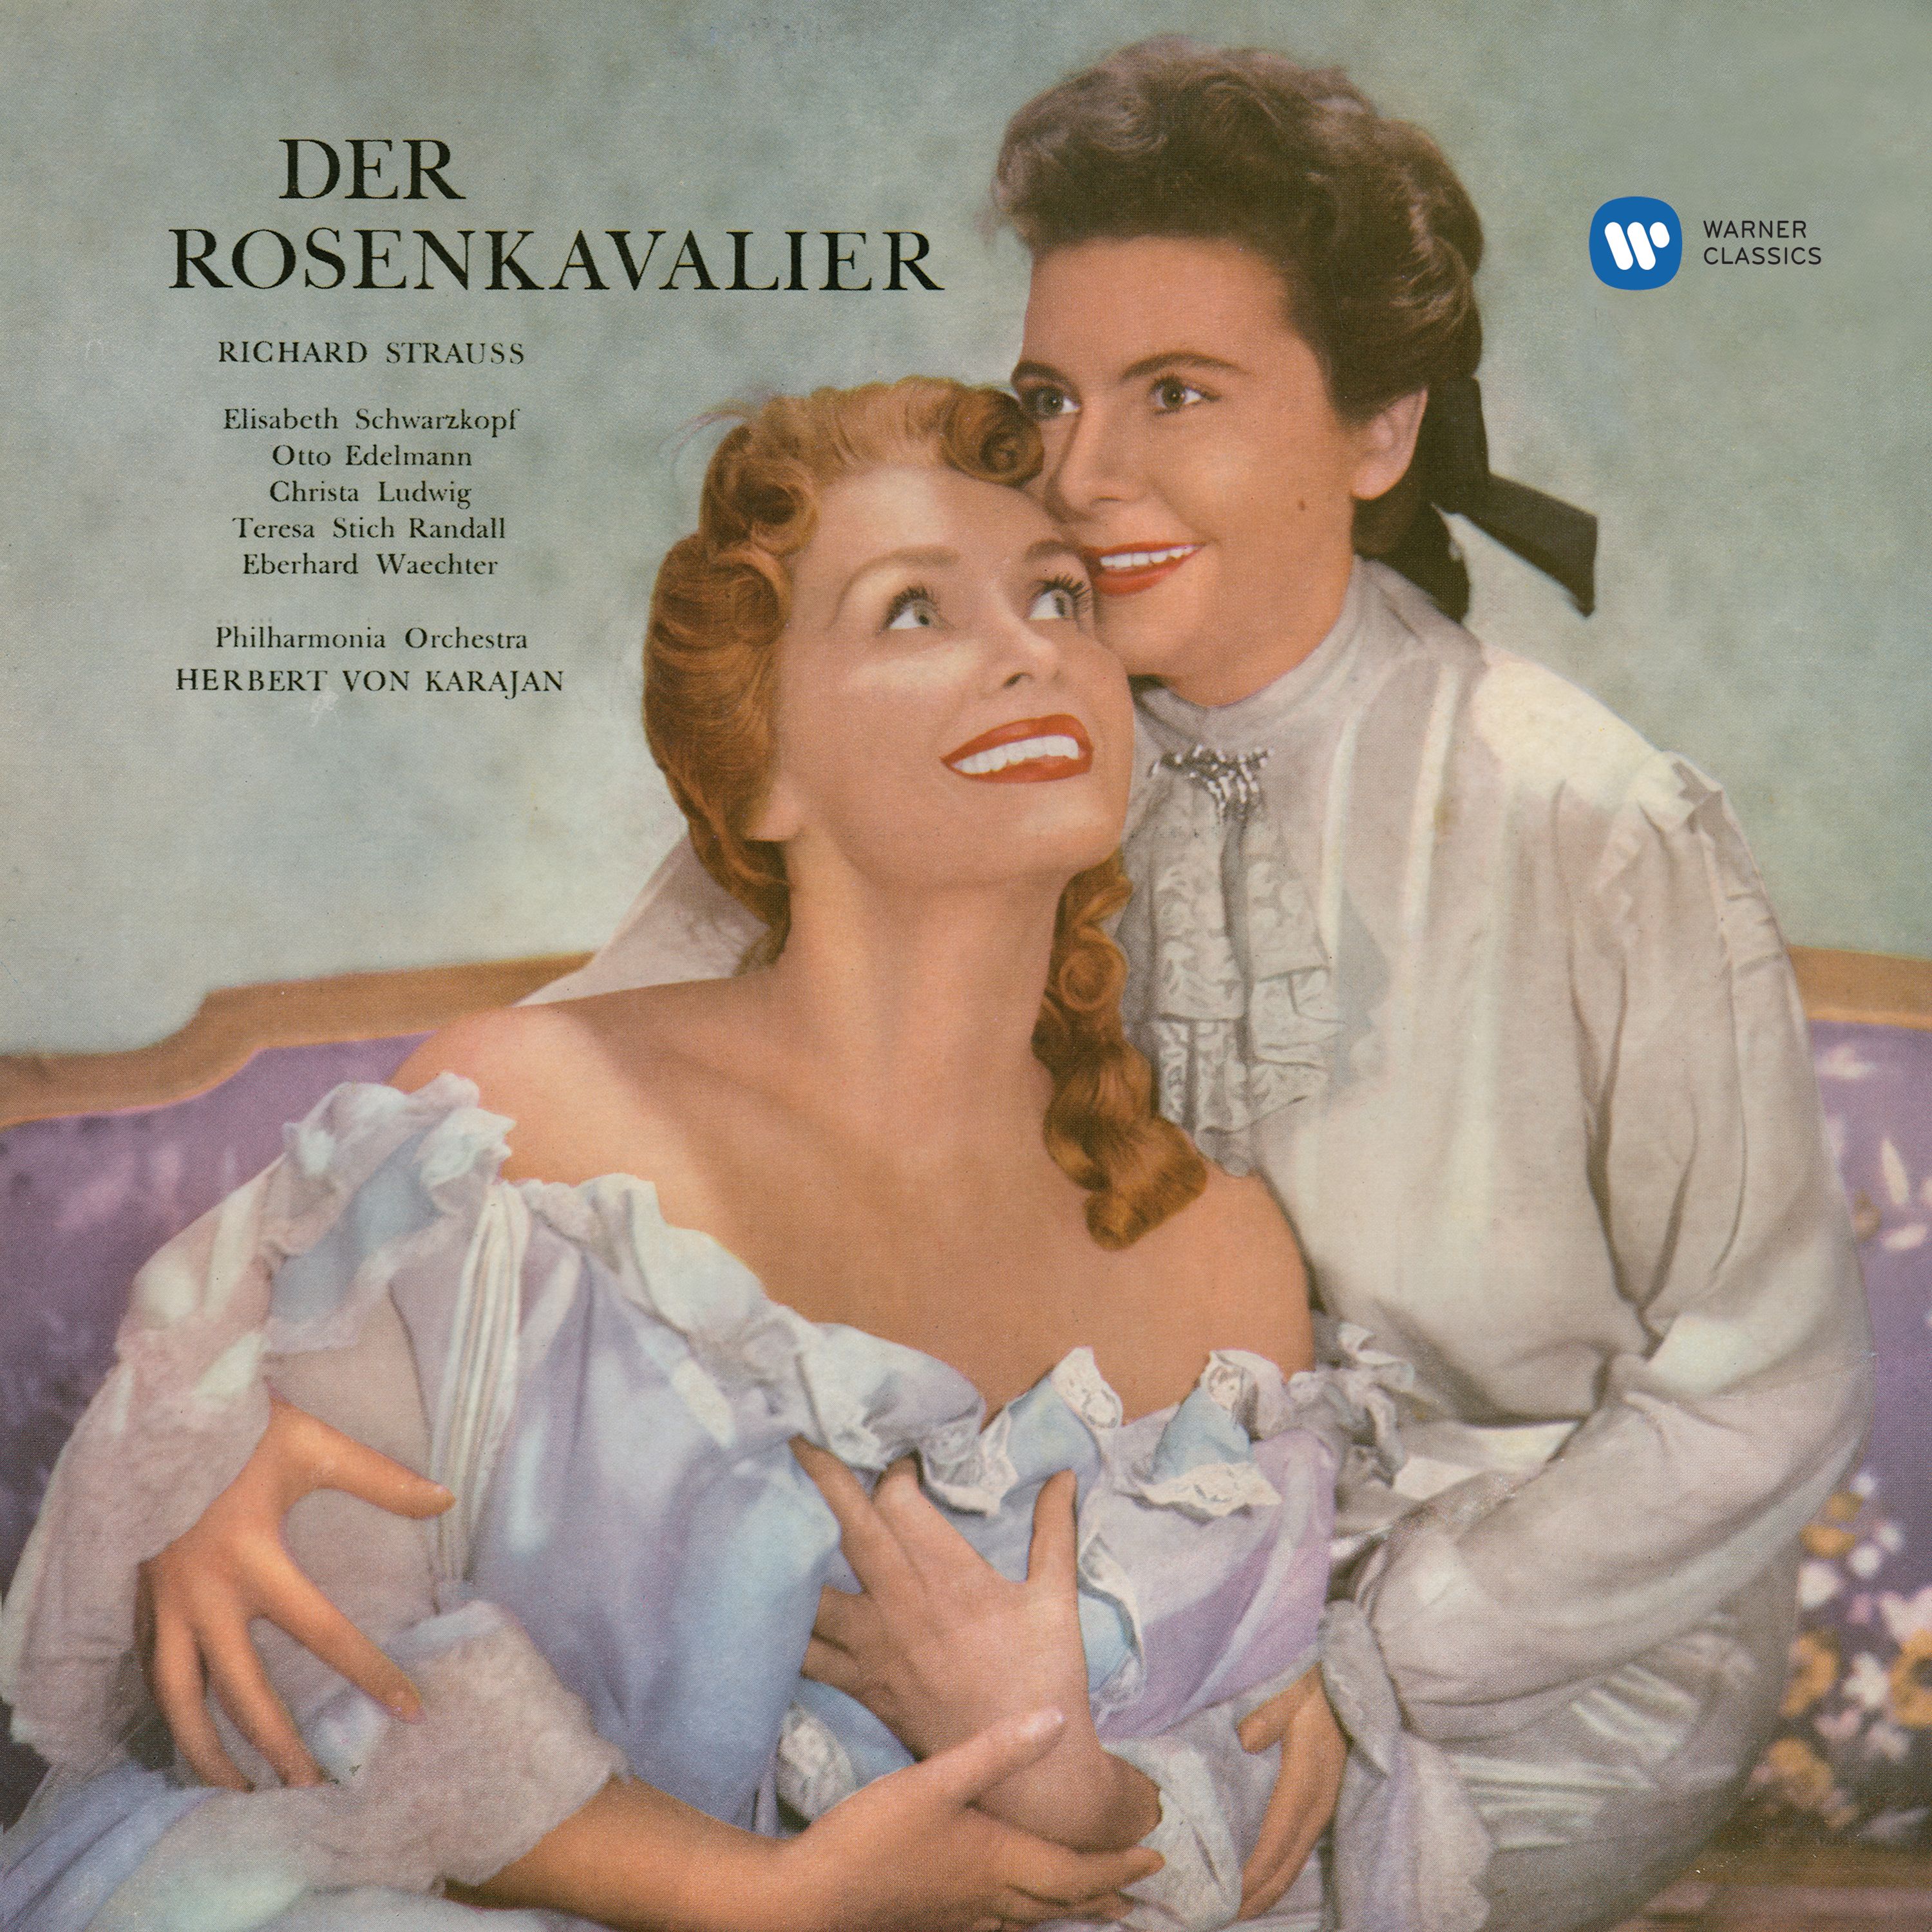 Der Rosenkavalier, Op. 59, Act 3: Introduction